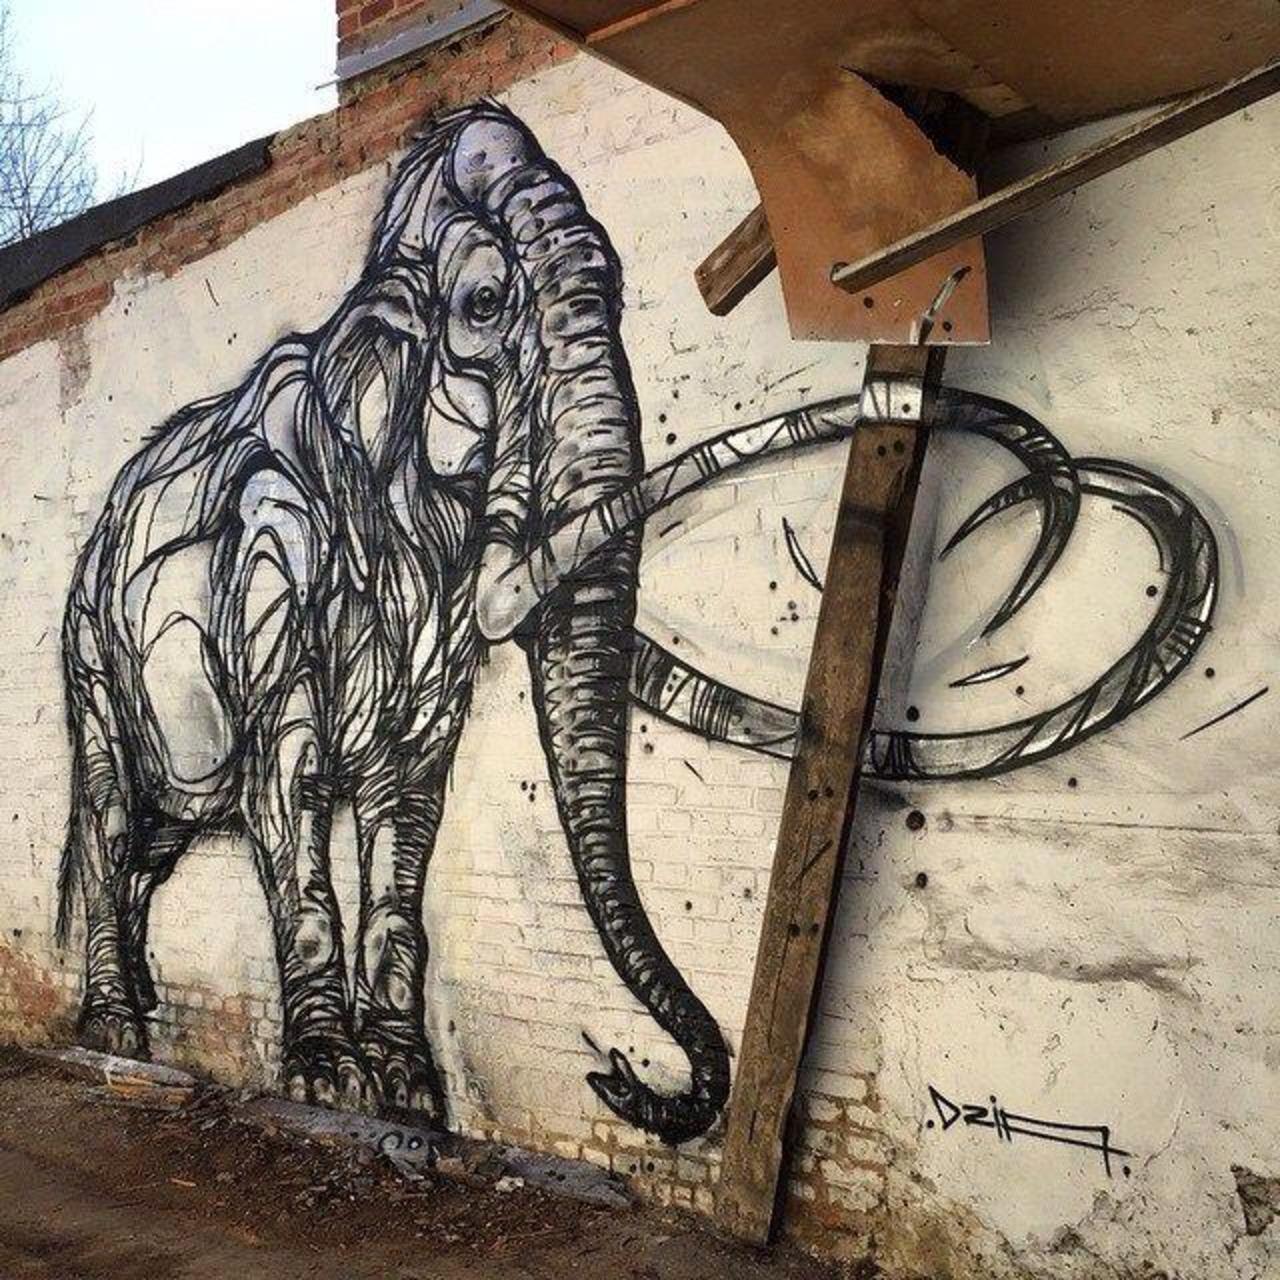 Mammoth. New nature in Street Art wall by DZIA 

#art #graffiti #mural #streetart http://t.co/QnzdLdShWQ